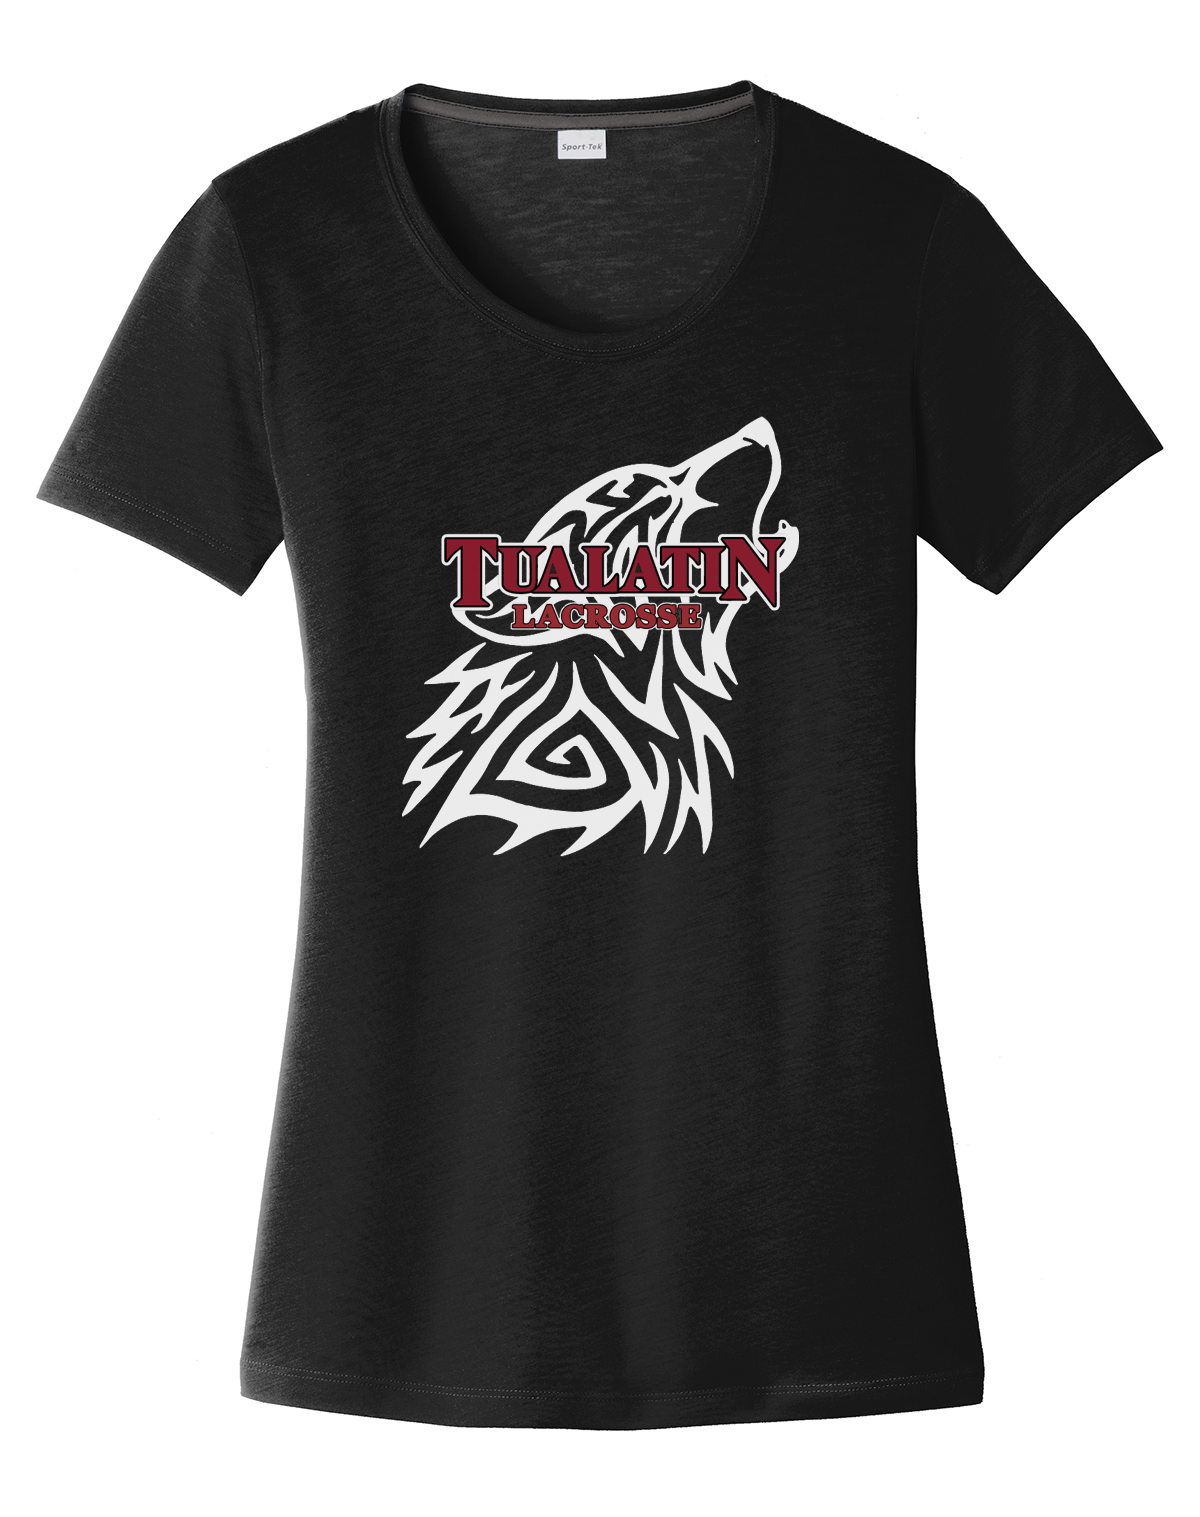 Tualatin Women's CottonTouch T-Shirt (Black)